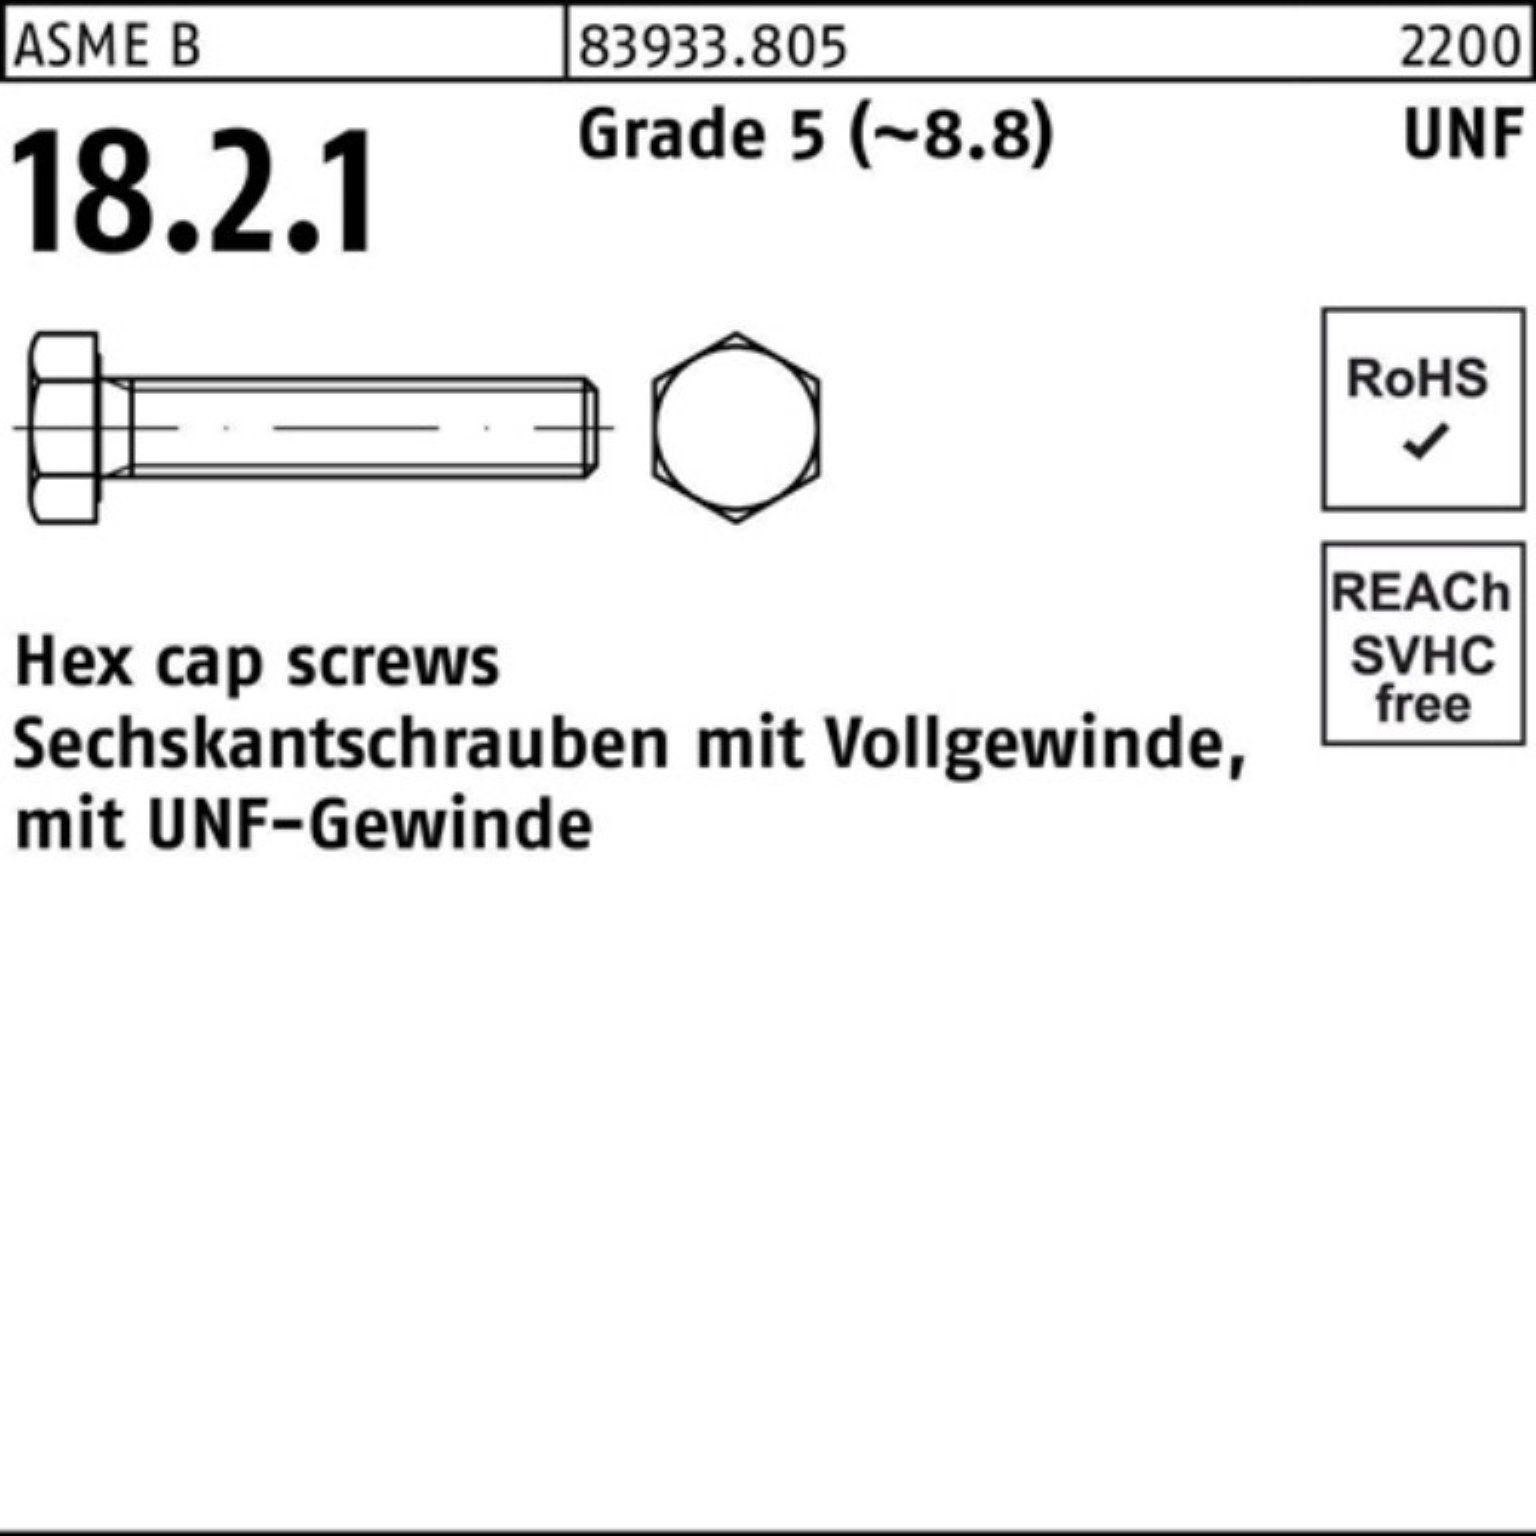 Reyher Sechskantschraube 100er Pack Sechskantschraube R 83933 UNF-Gewinde VG 1/2x 1 1/4 Grade 5